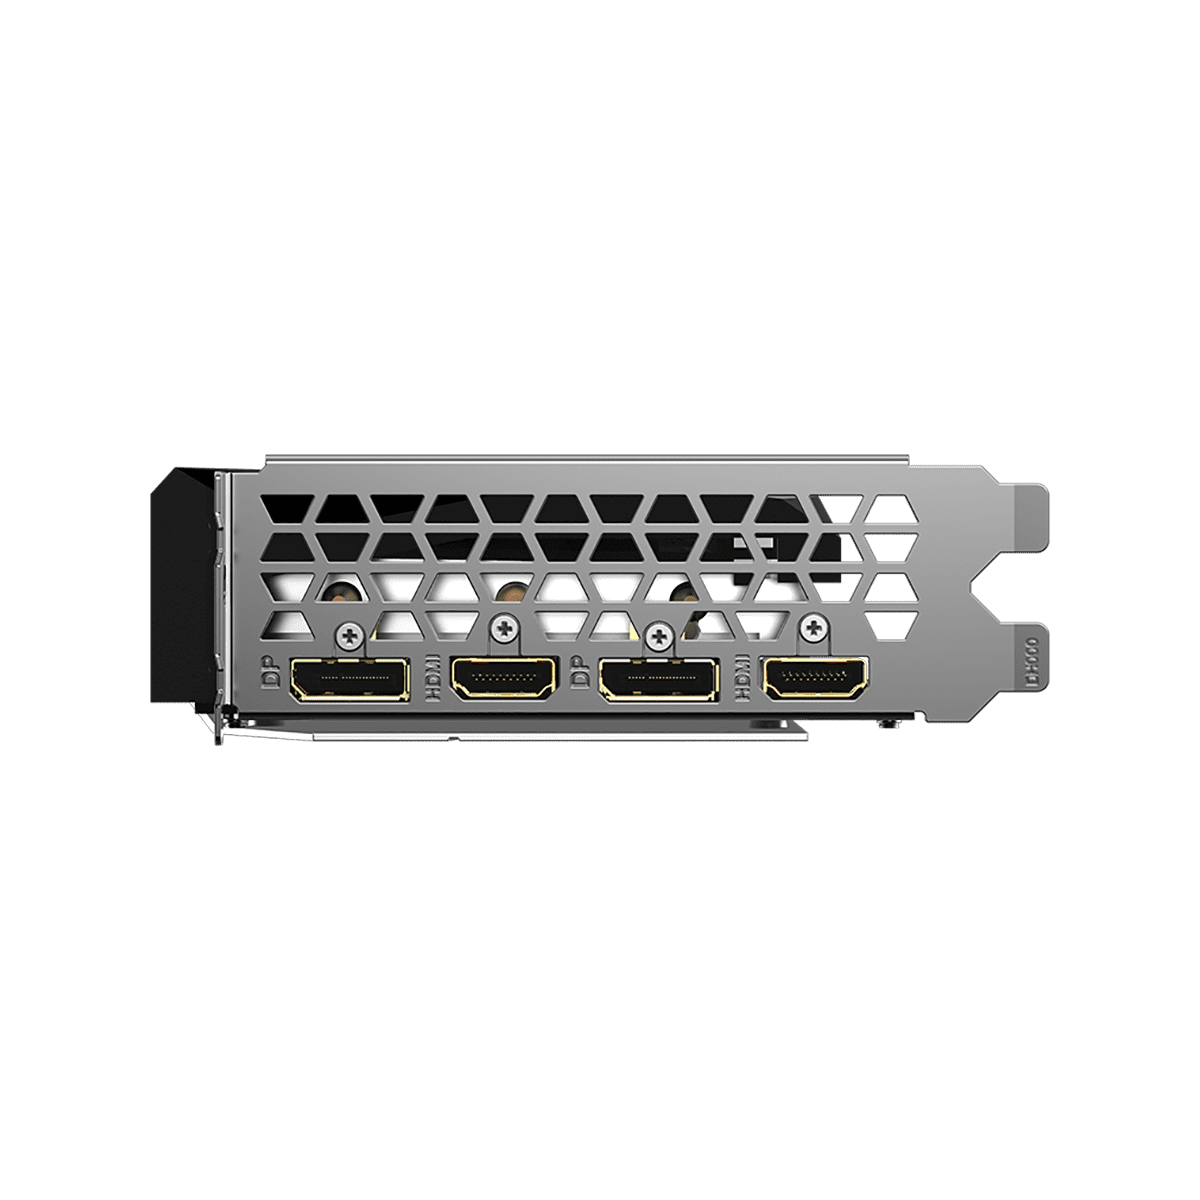 GV-N3060GAMING OC-12GD R2.0 | GIGABYTE NVIDIA GEFORCE RTX 3060